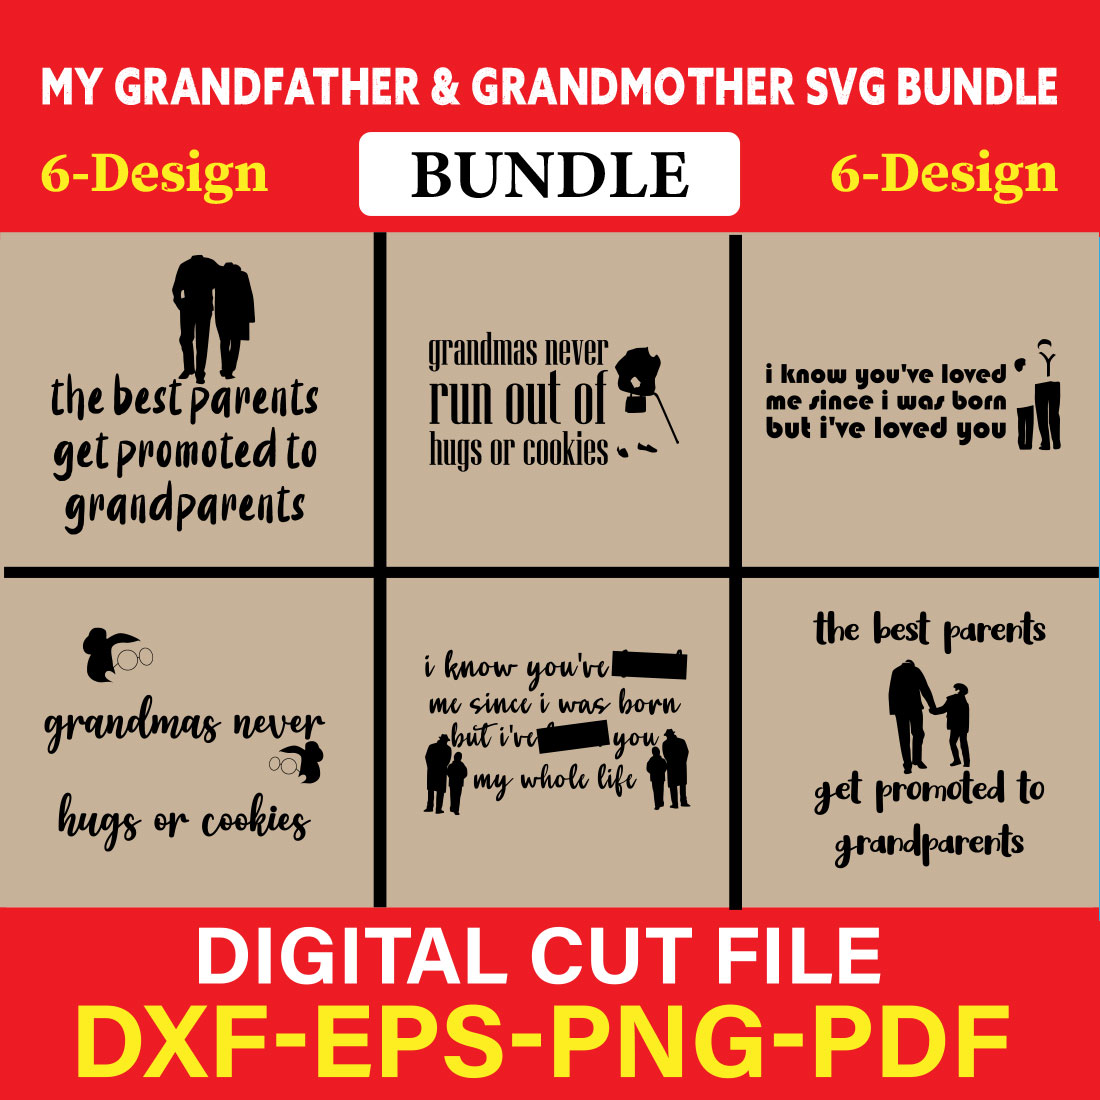 My Grandfather & Grandmother T-shirt Design Bundle Vol-3 cover image.